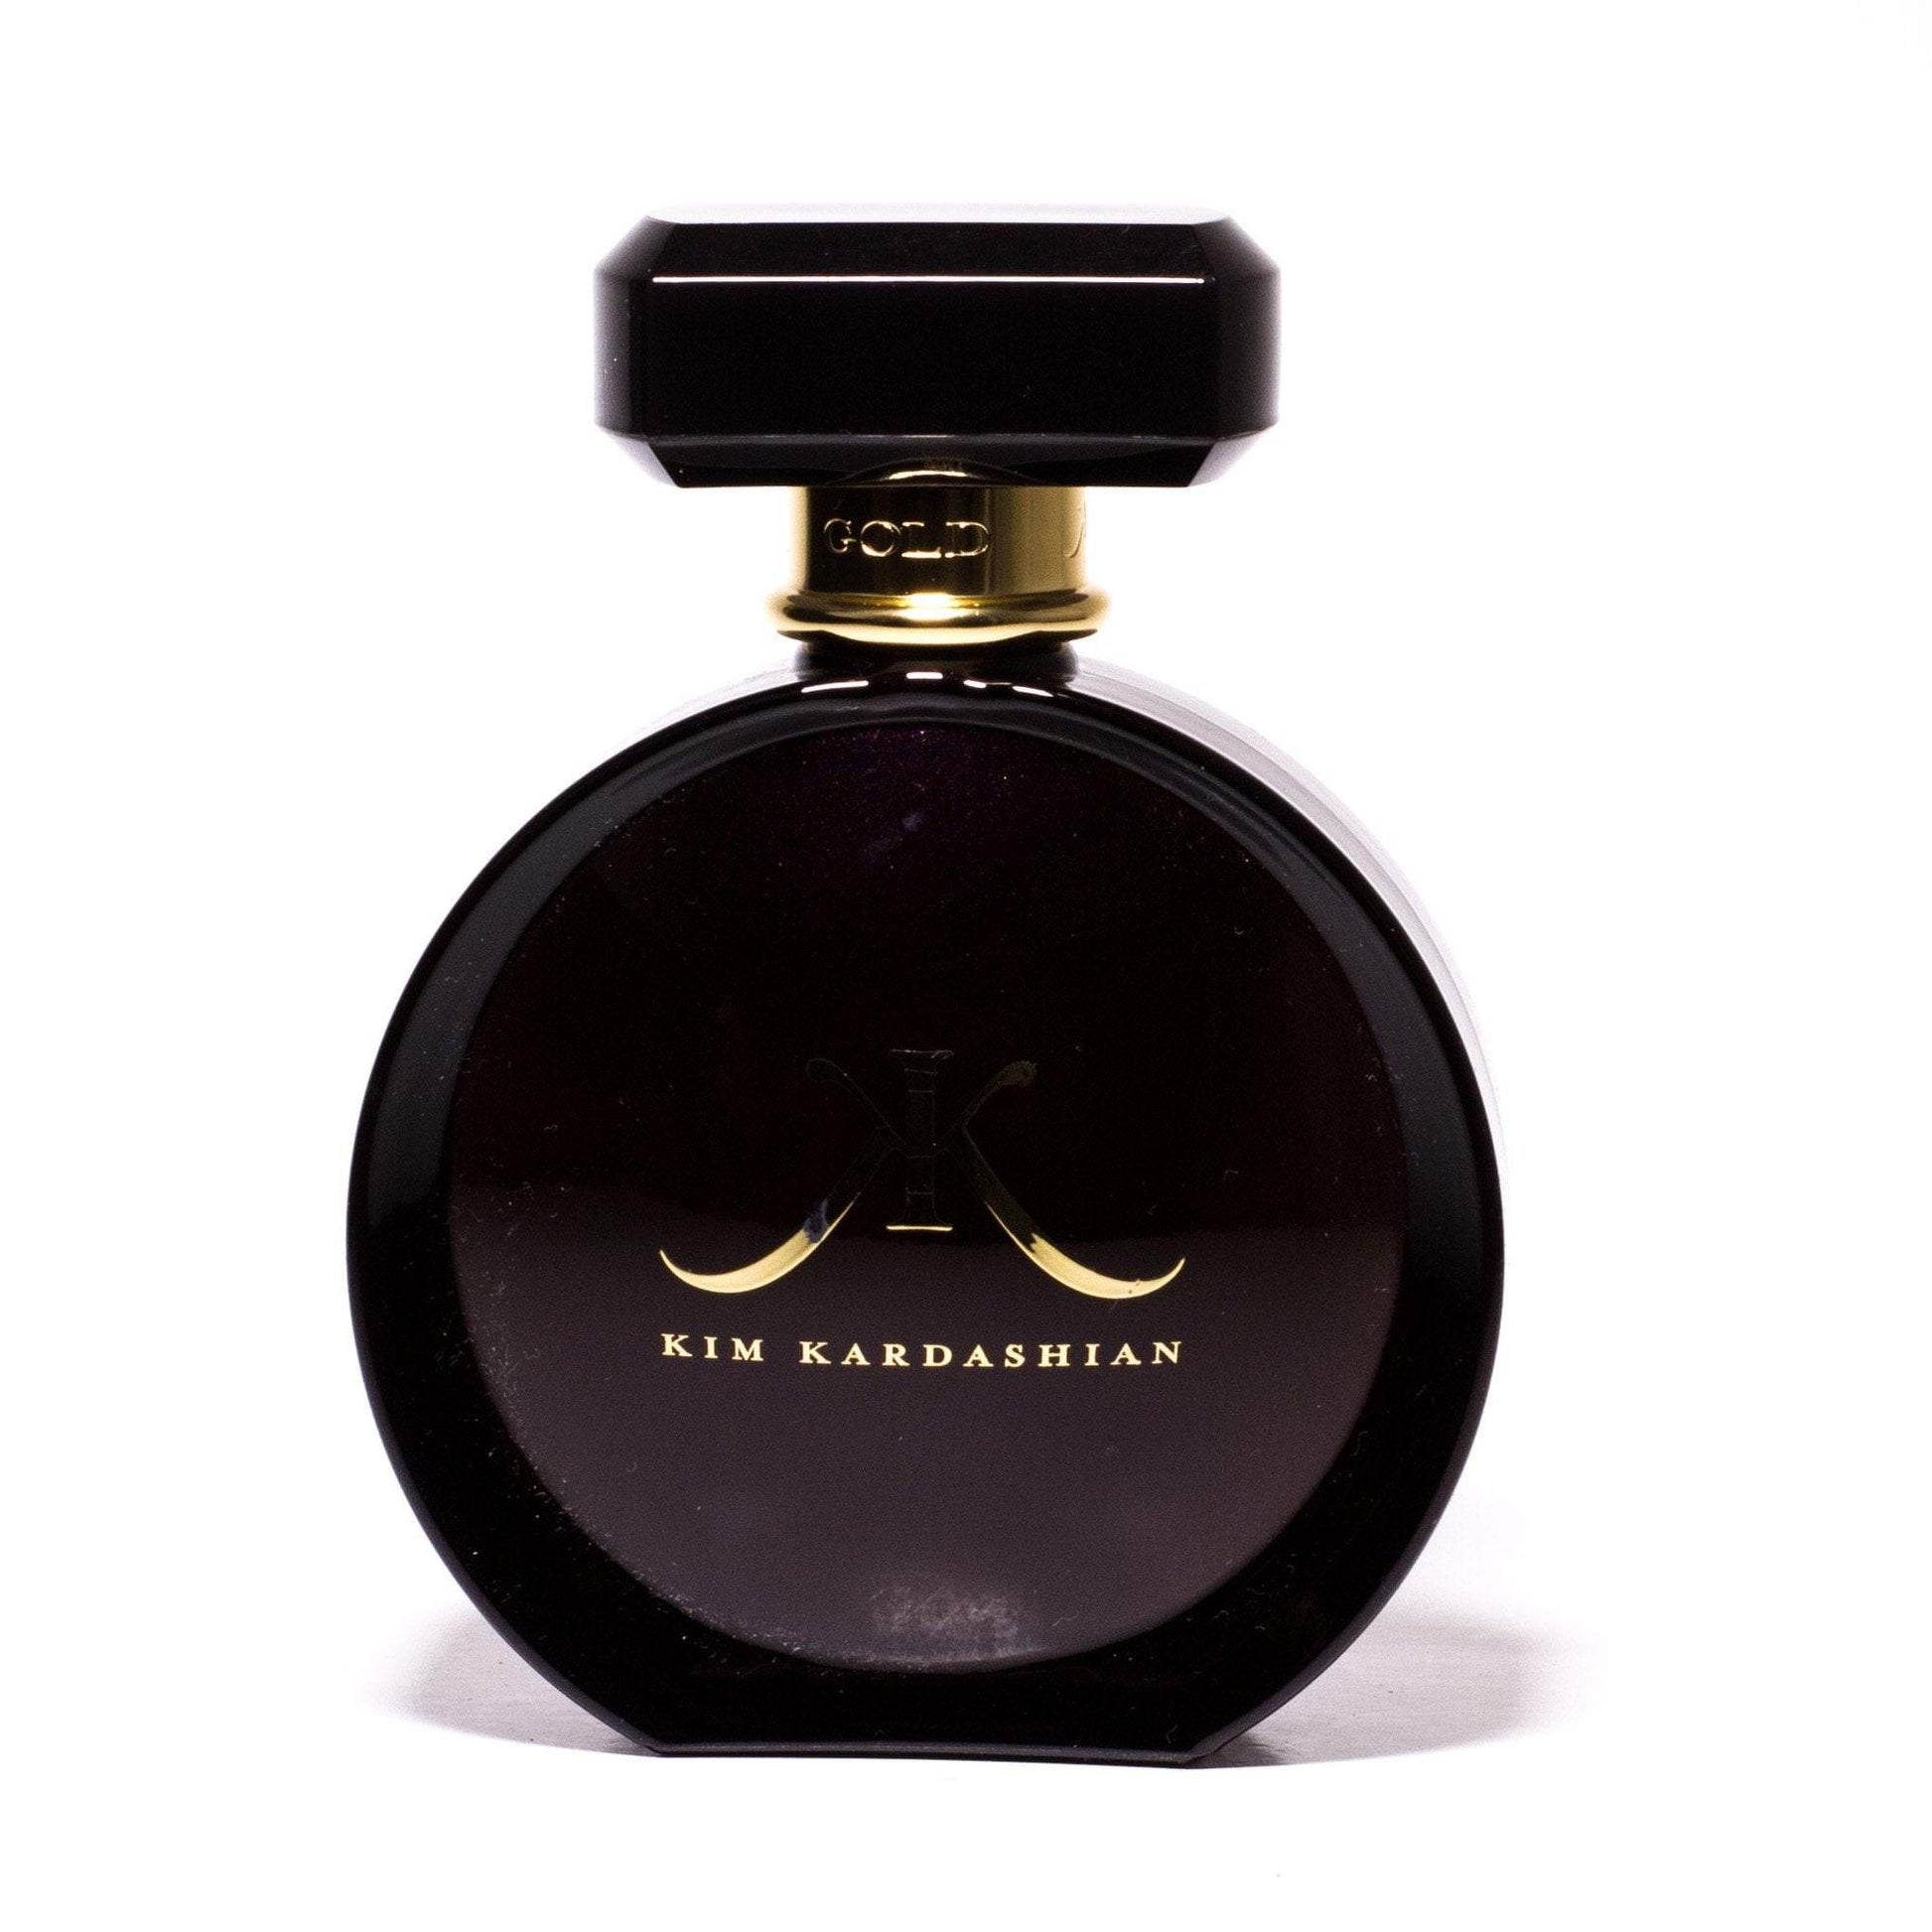 Kim Kardashian Gold Eau de Parfum Spray for Women by Kim Kardashian, Product image 2